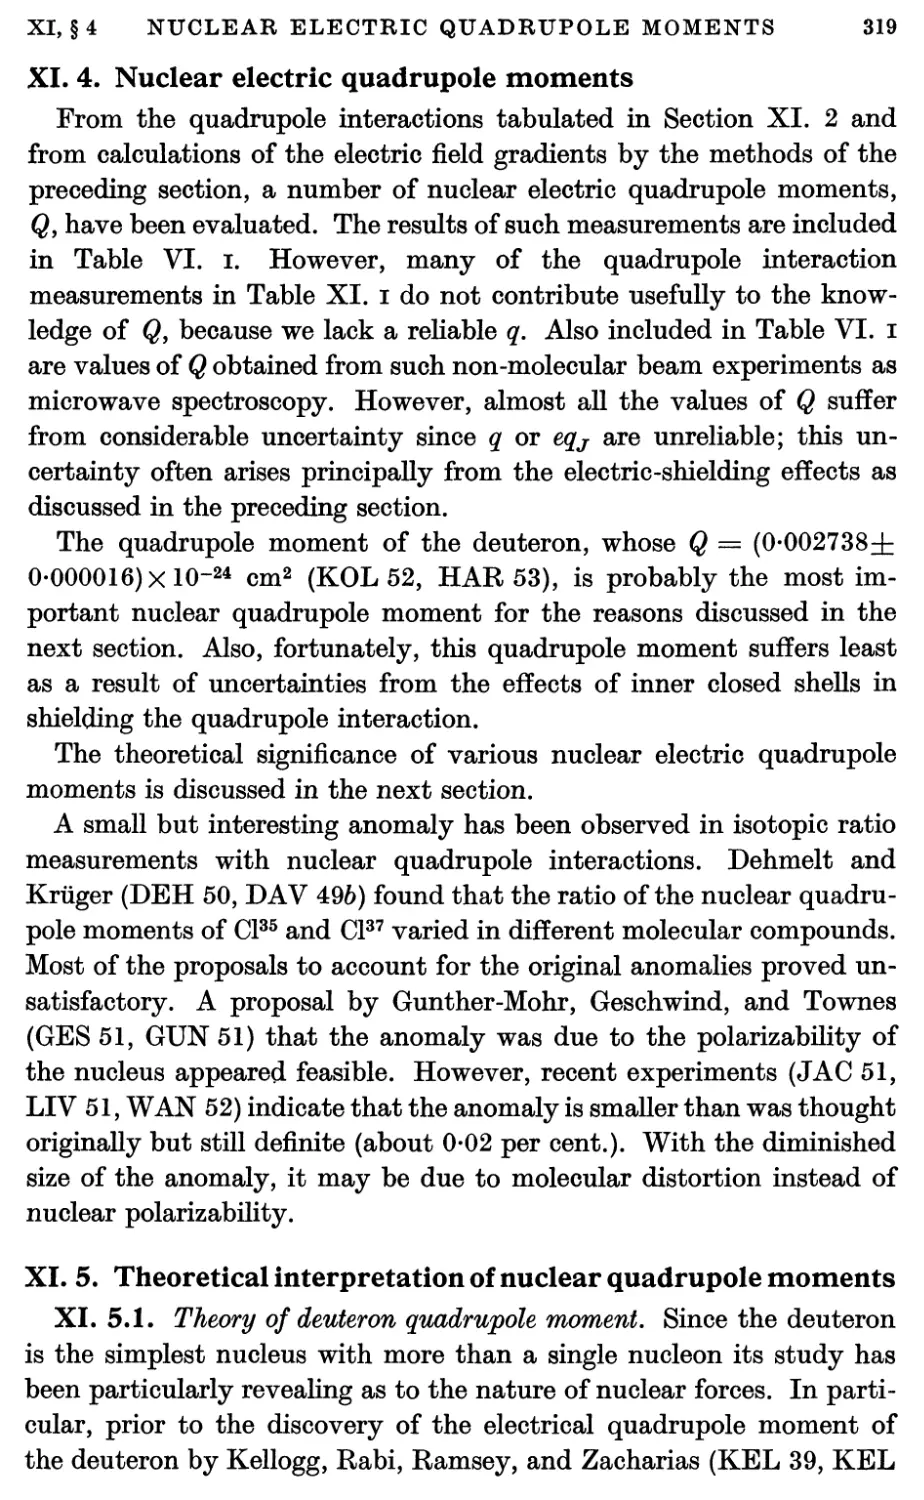 XI.4. Nuclear Electric Quadrupole Moments
XI.5. Theoretical Interpretation of Nuclear Quadrupole Moments